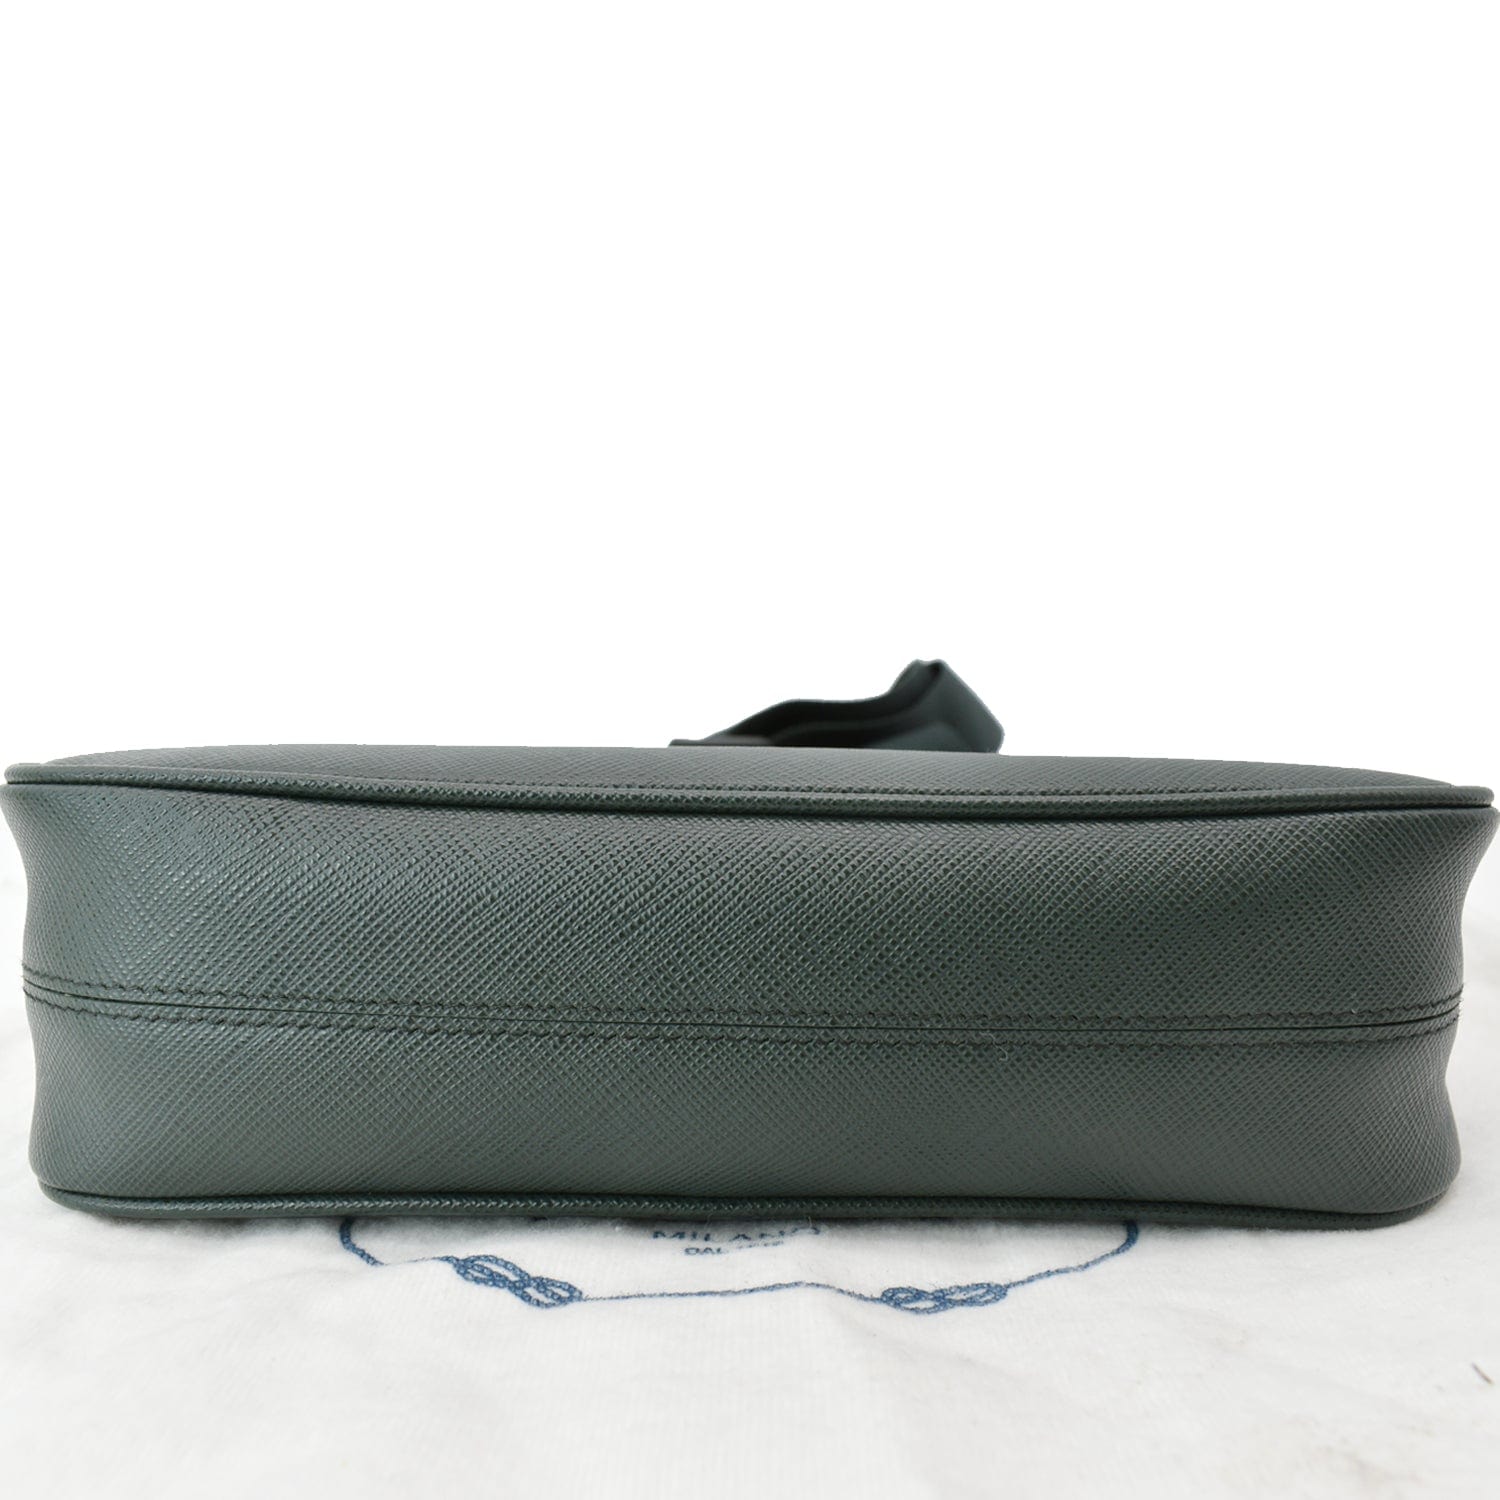 Promenade leather handbag Prada Green in Leather - 36314714